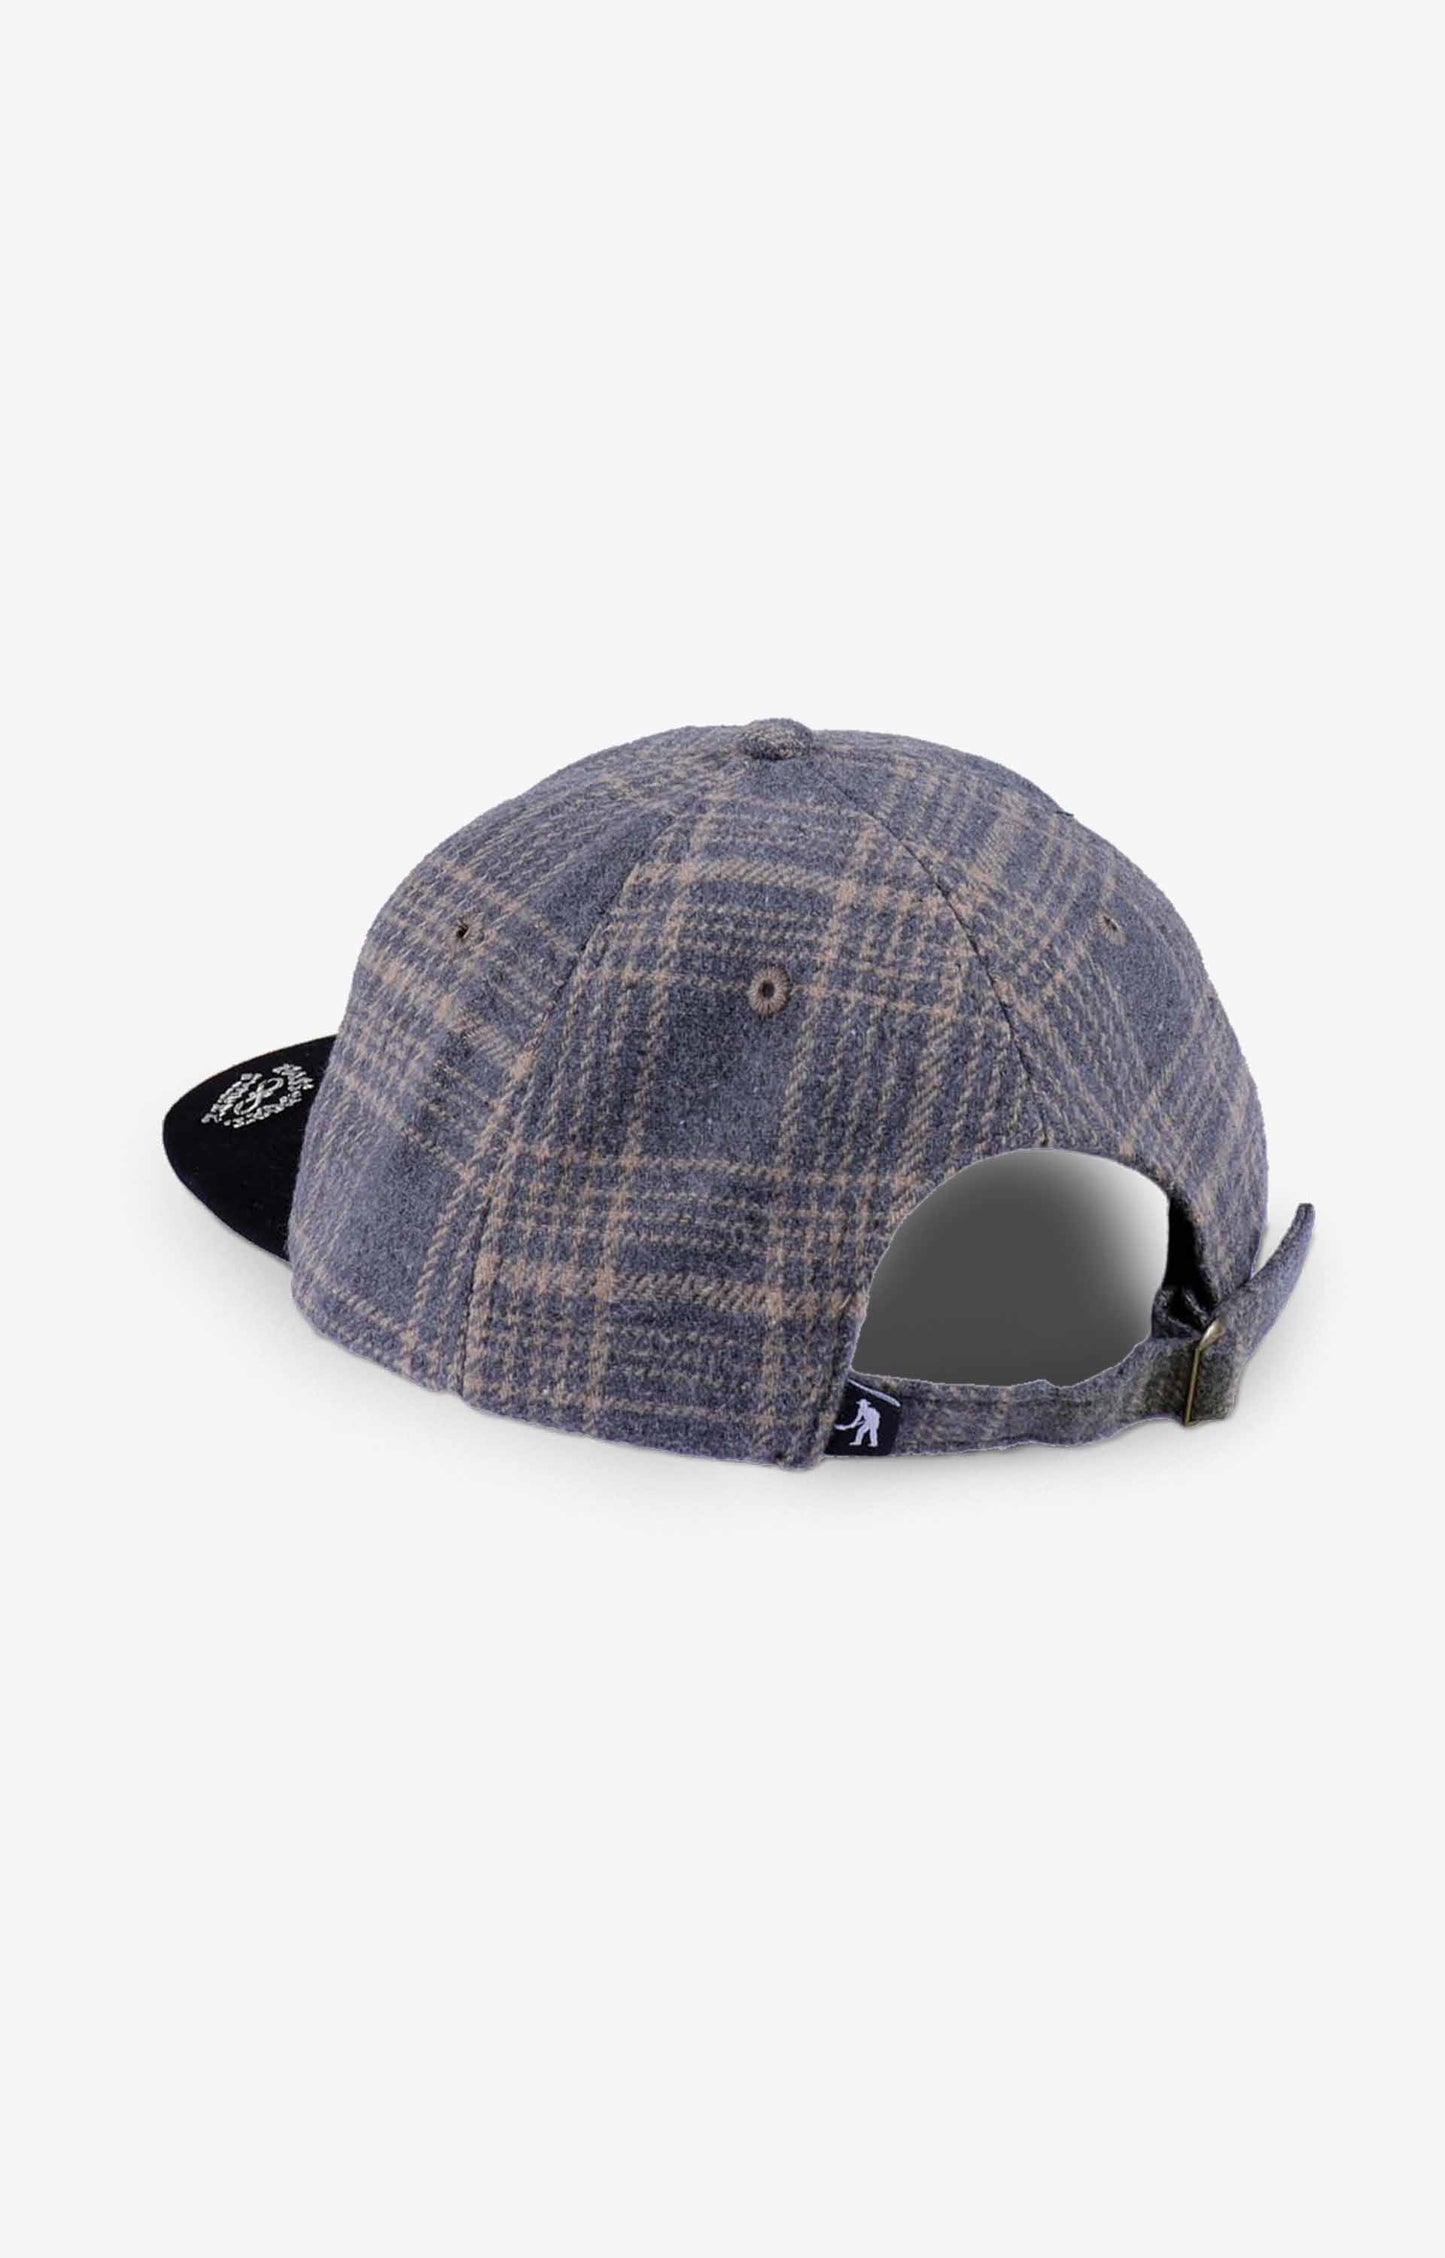 Pass~Port Moniker Cap Headwear, Grey/Black